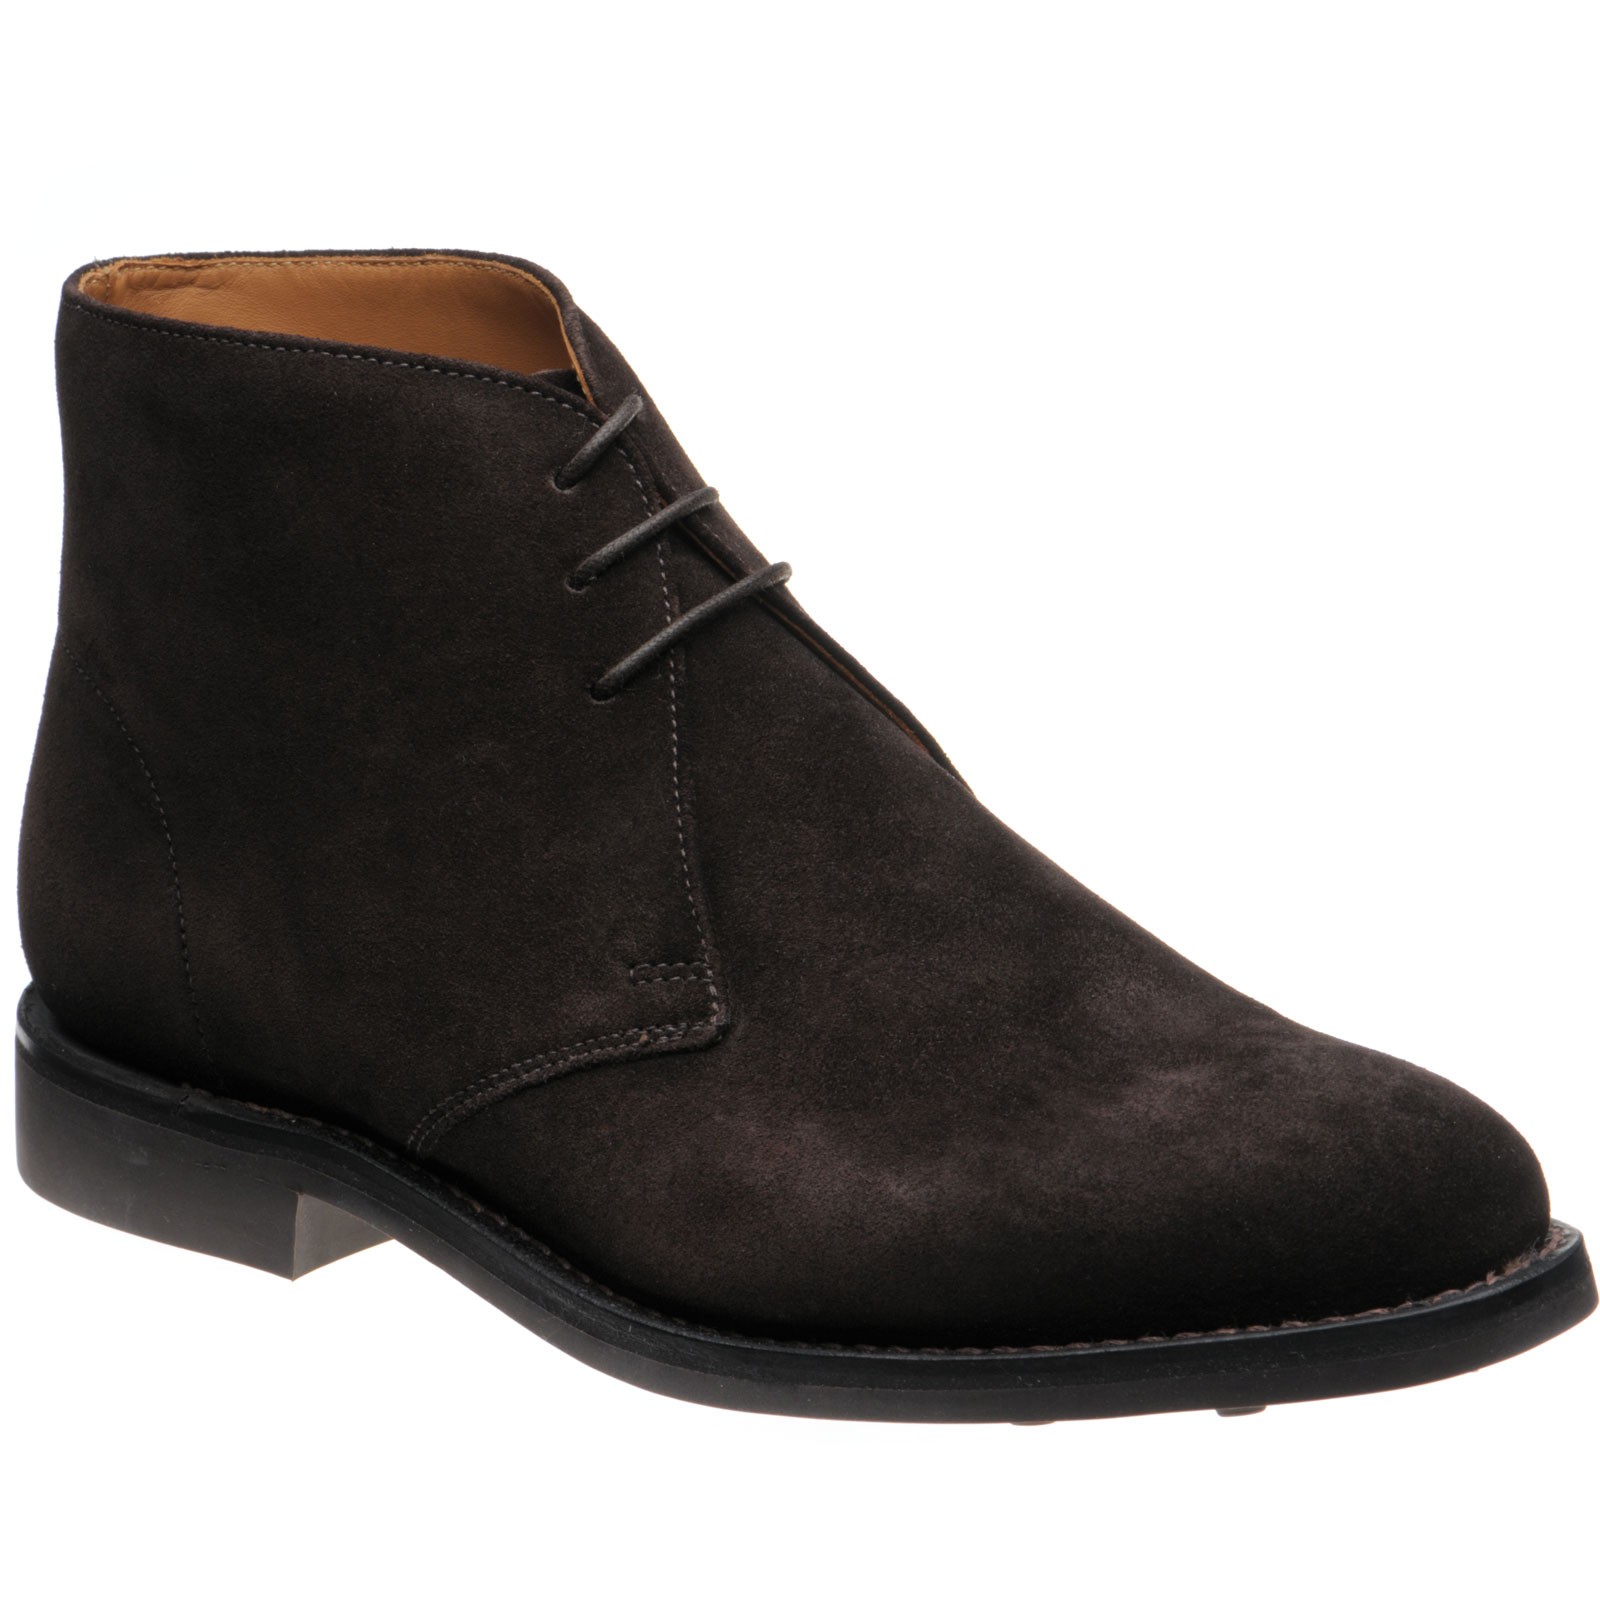 Herring shoes | Herring Classic | Grays in Brown Suede at Herring Shoes